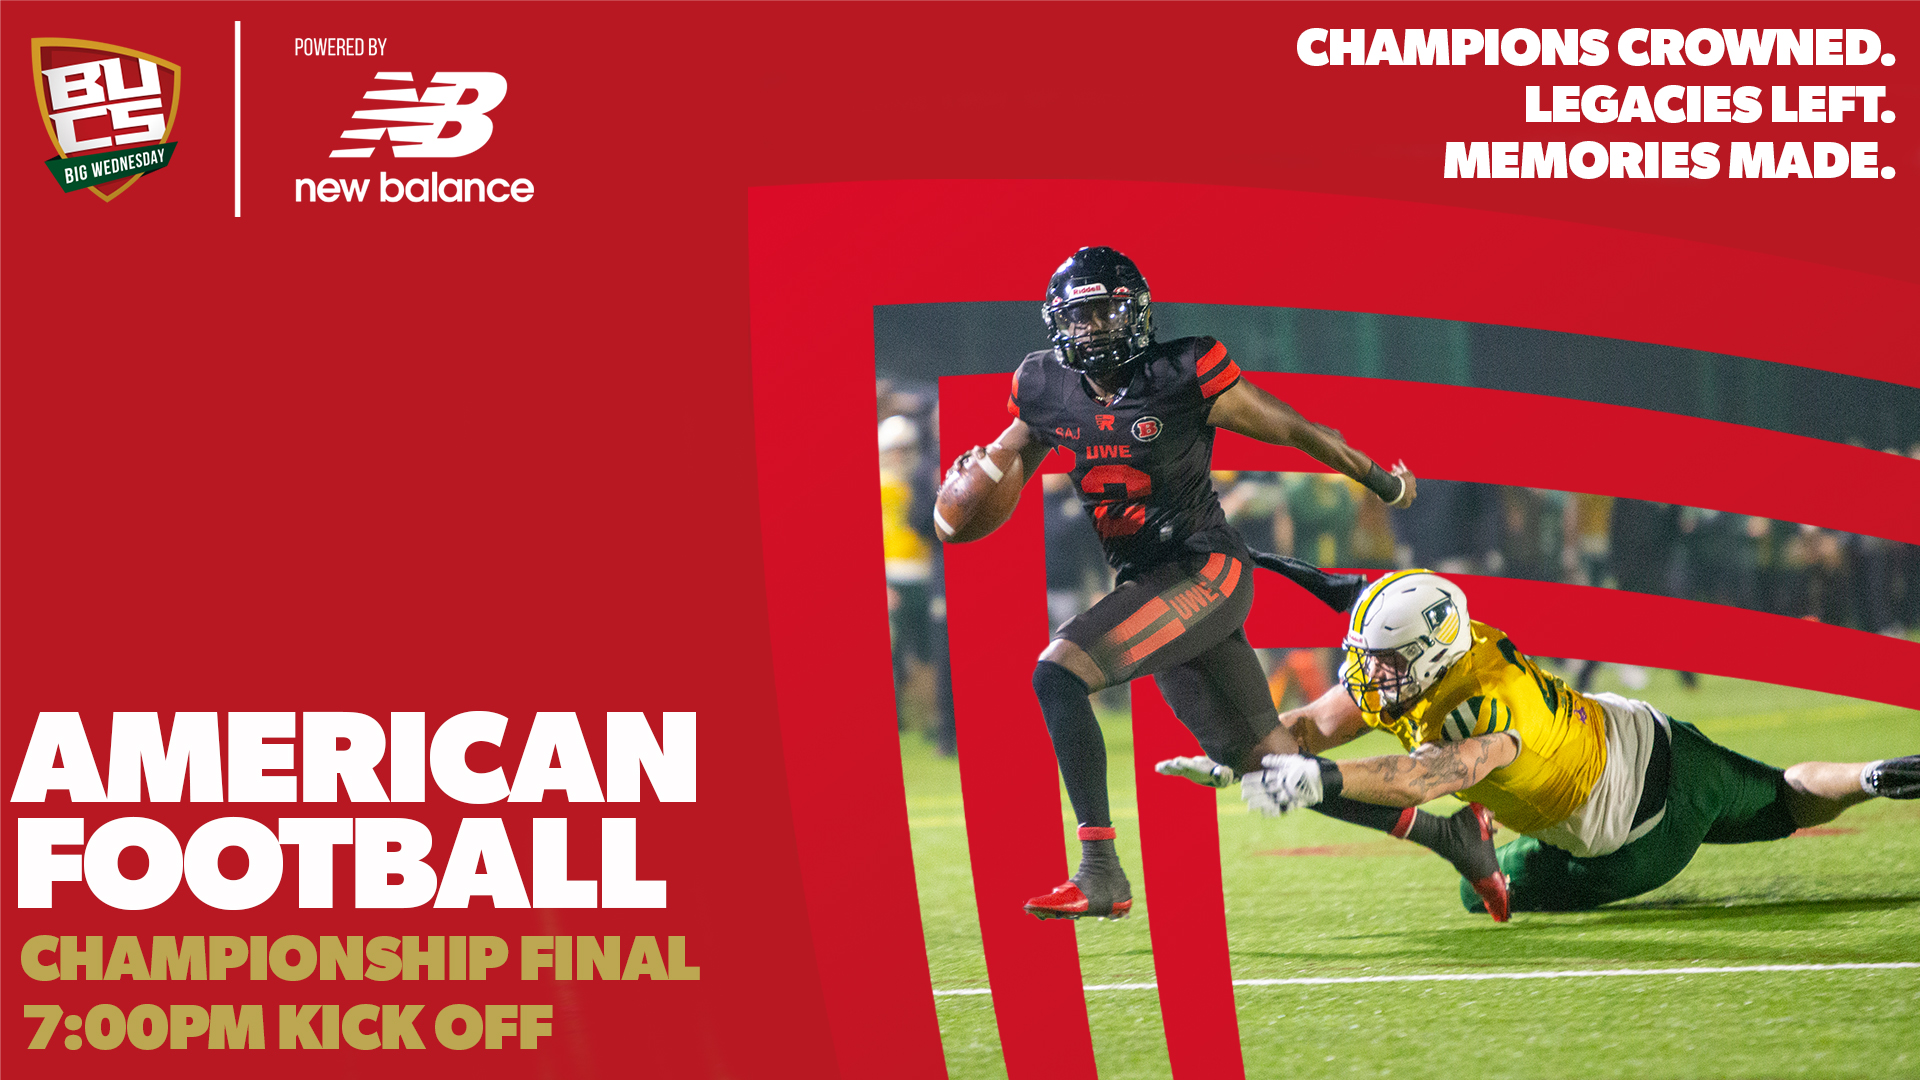 BUCS Big Wednesday American Football Championship Game Poster